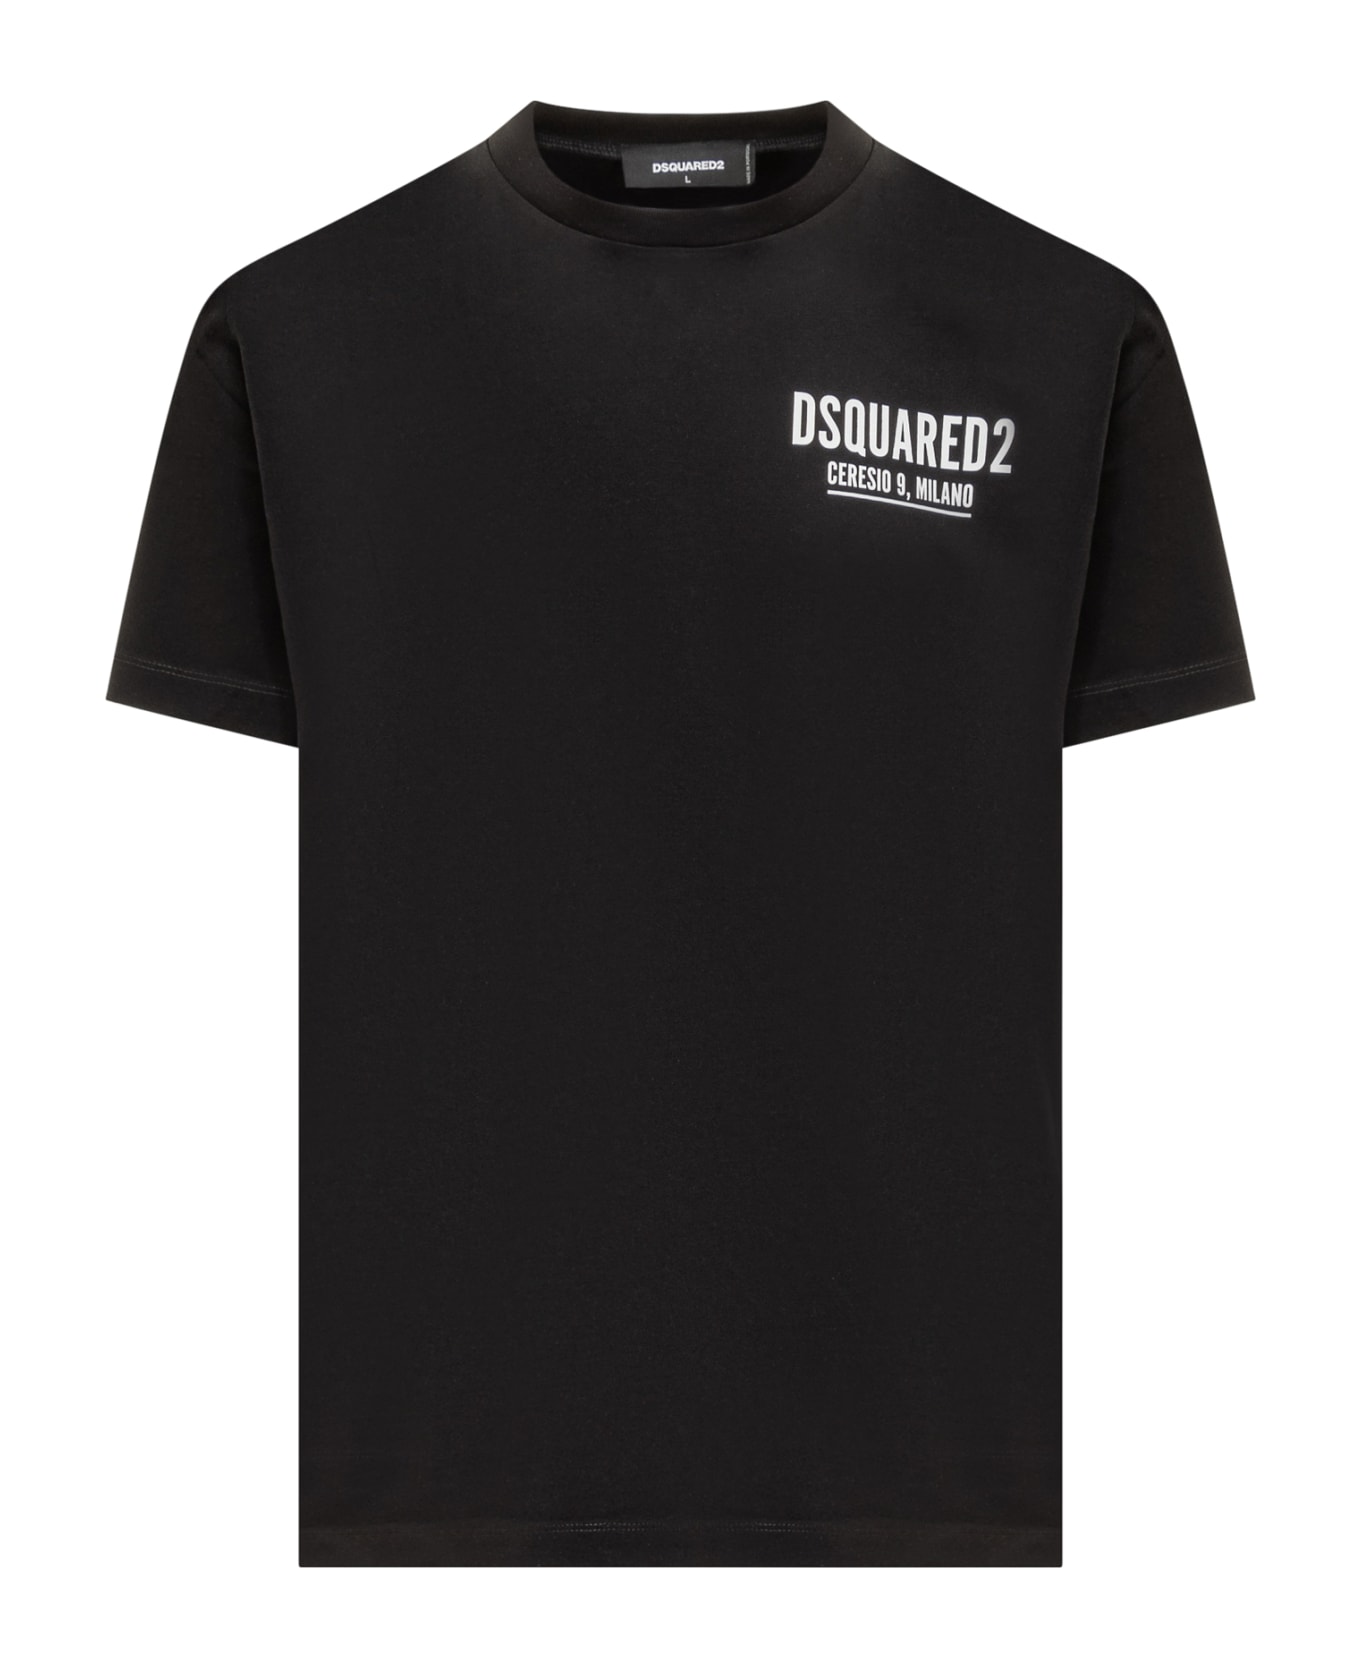 Dsquared2 Ceresio 9 T-shirt - BLACK シャツ